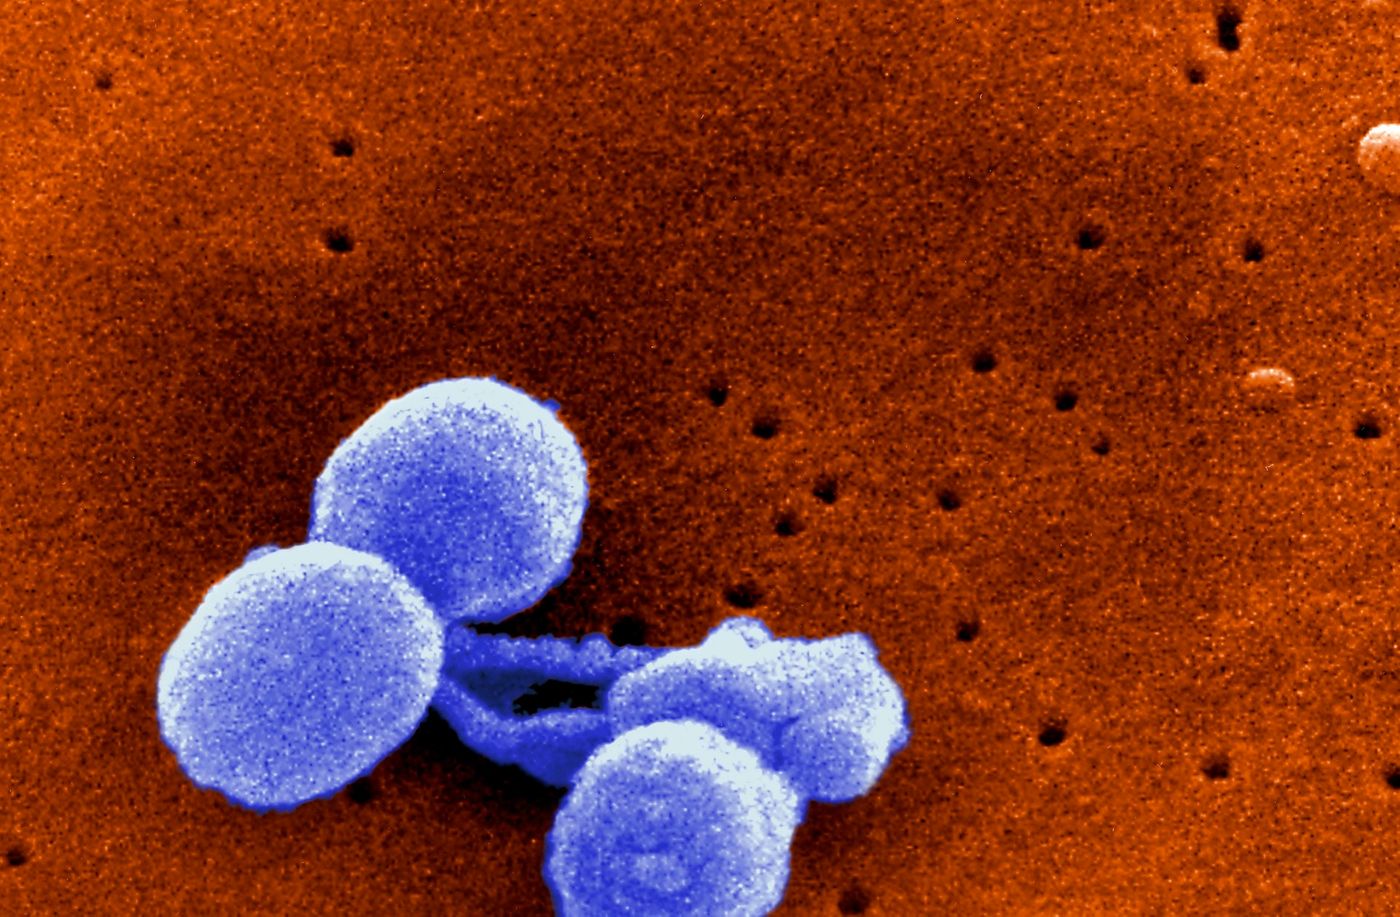 Scanning electron micrograph of Streptococcus pneumoniae